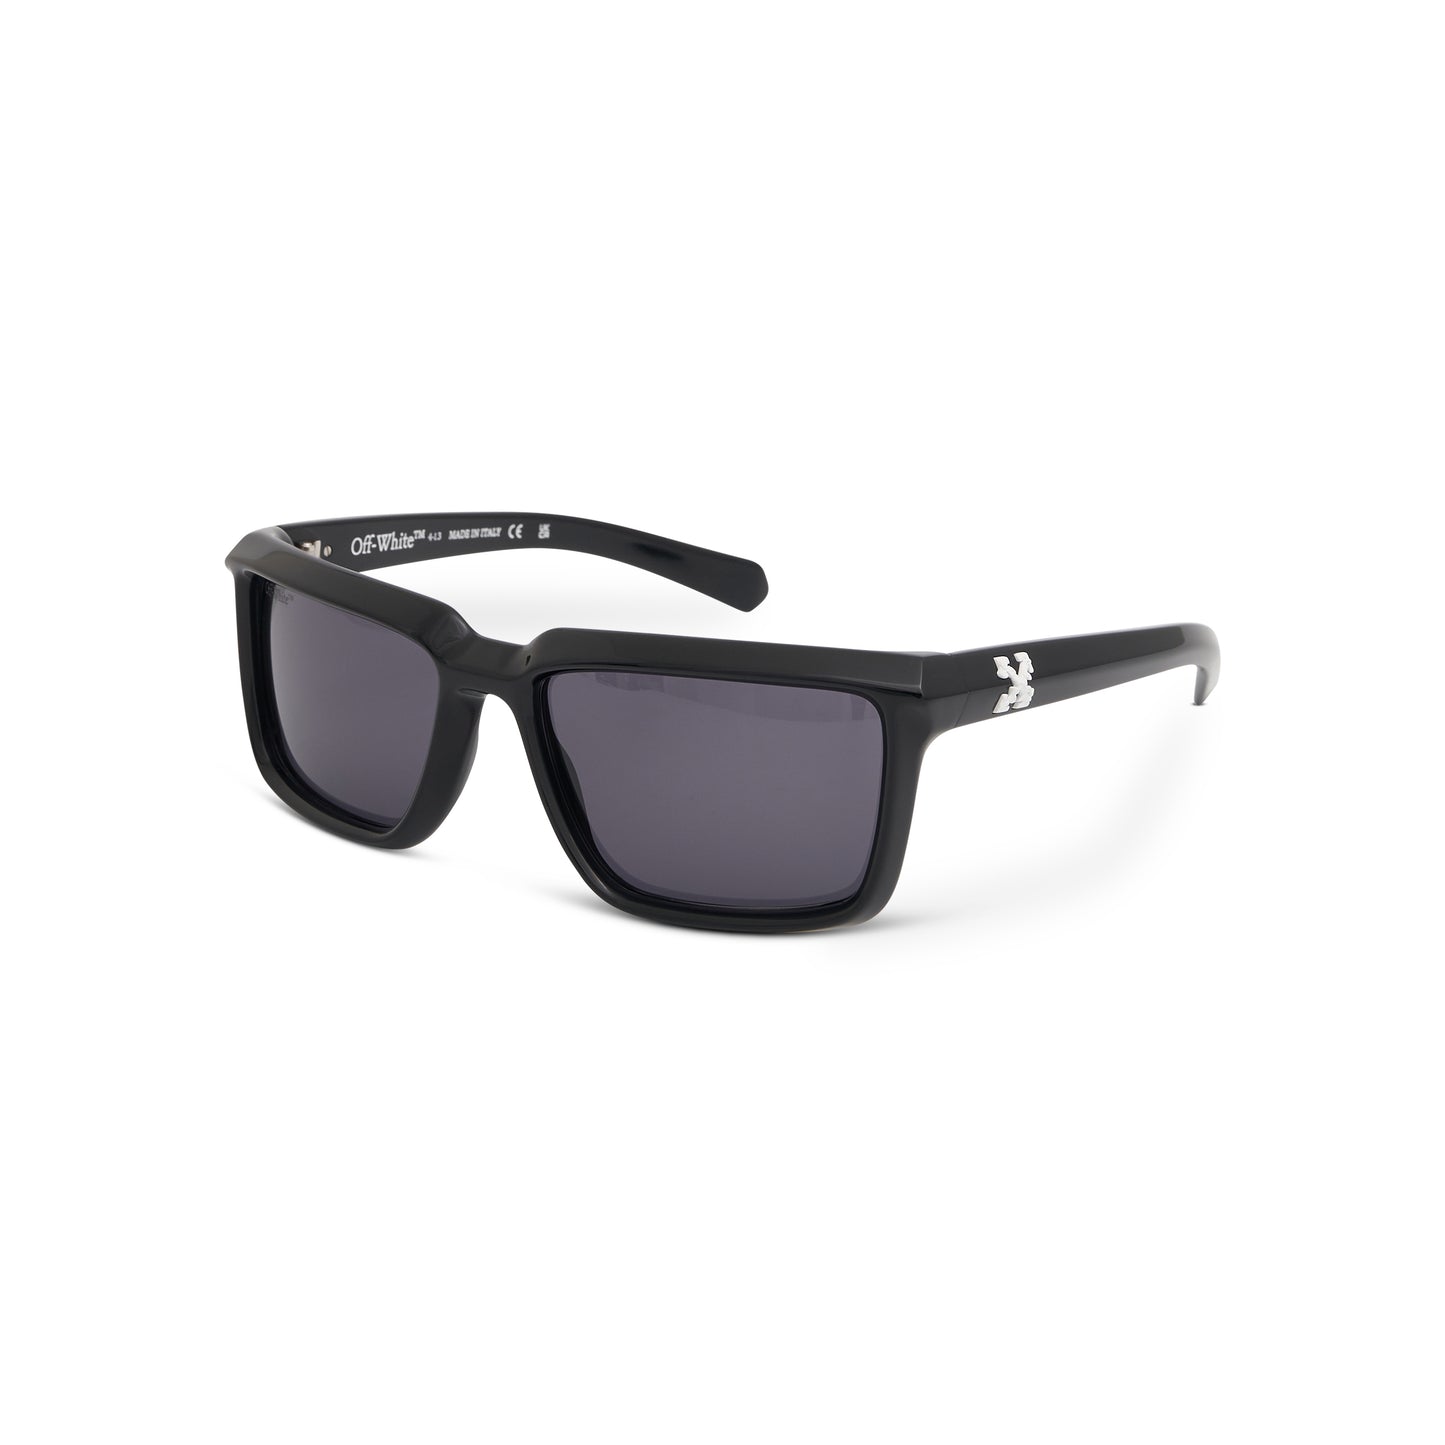 Portland Sunglasses in Black/Dark Grey